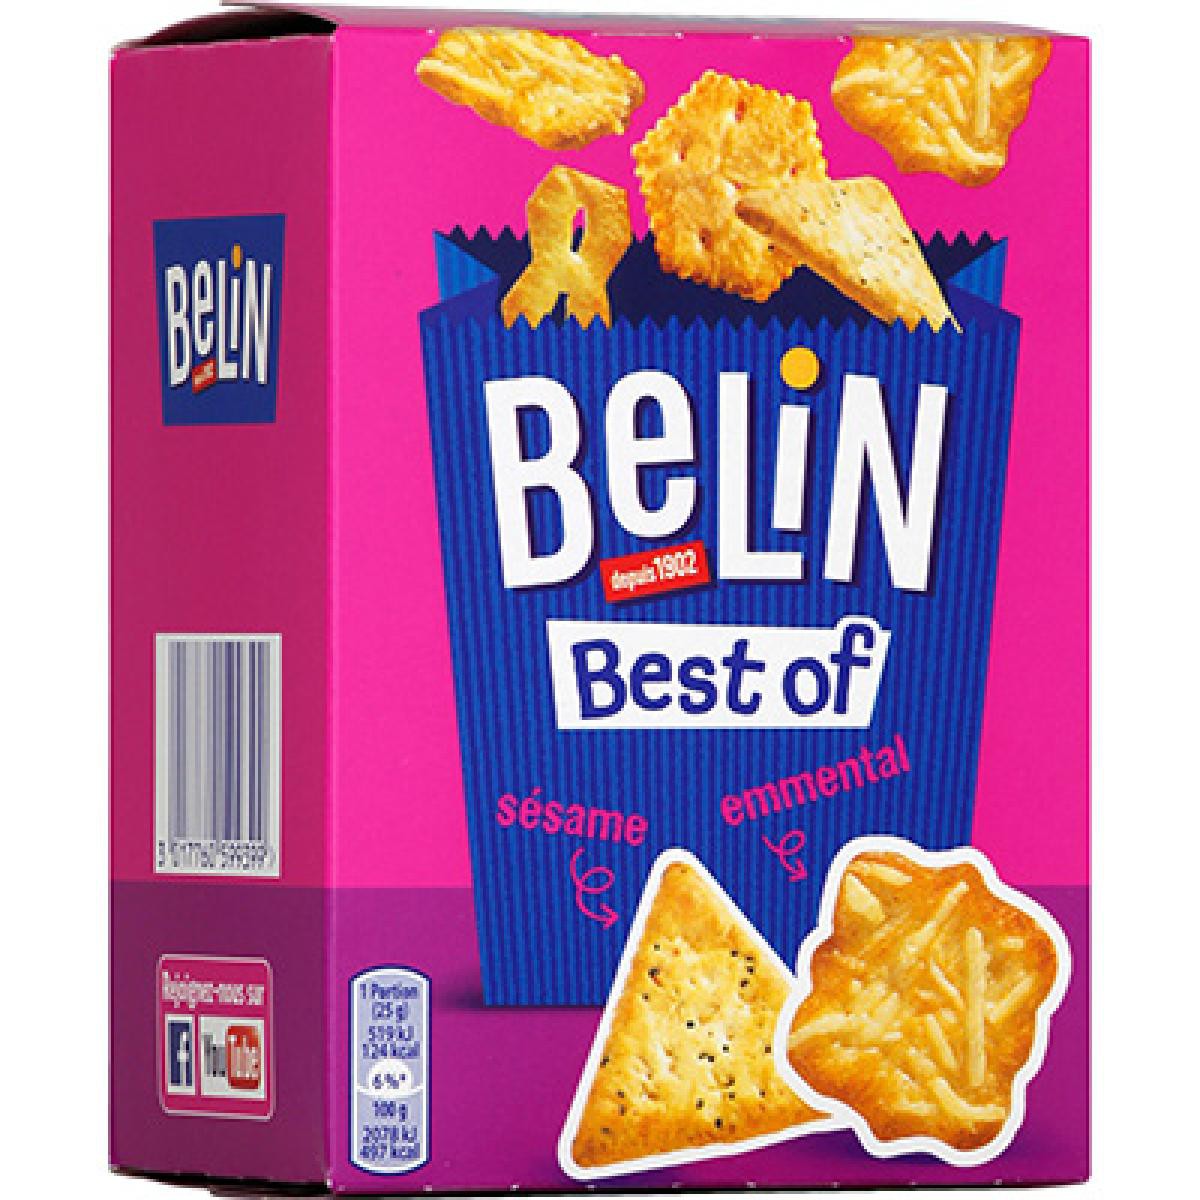 Boîte de gâteaux salés assortis BELIN -720g - Biscuits apéritifs